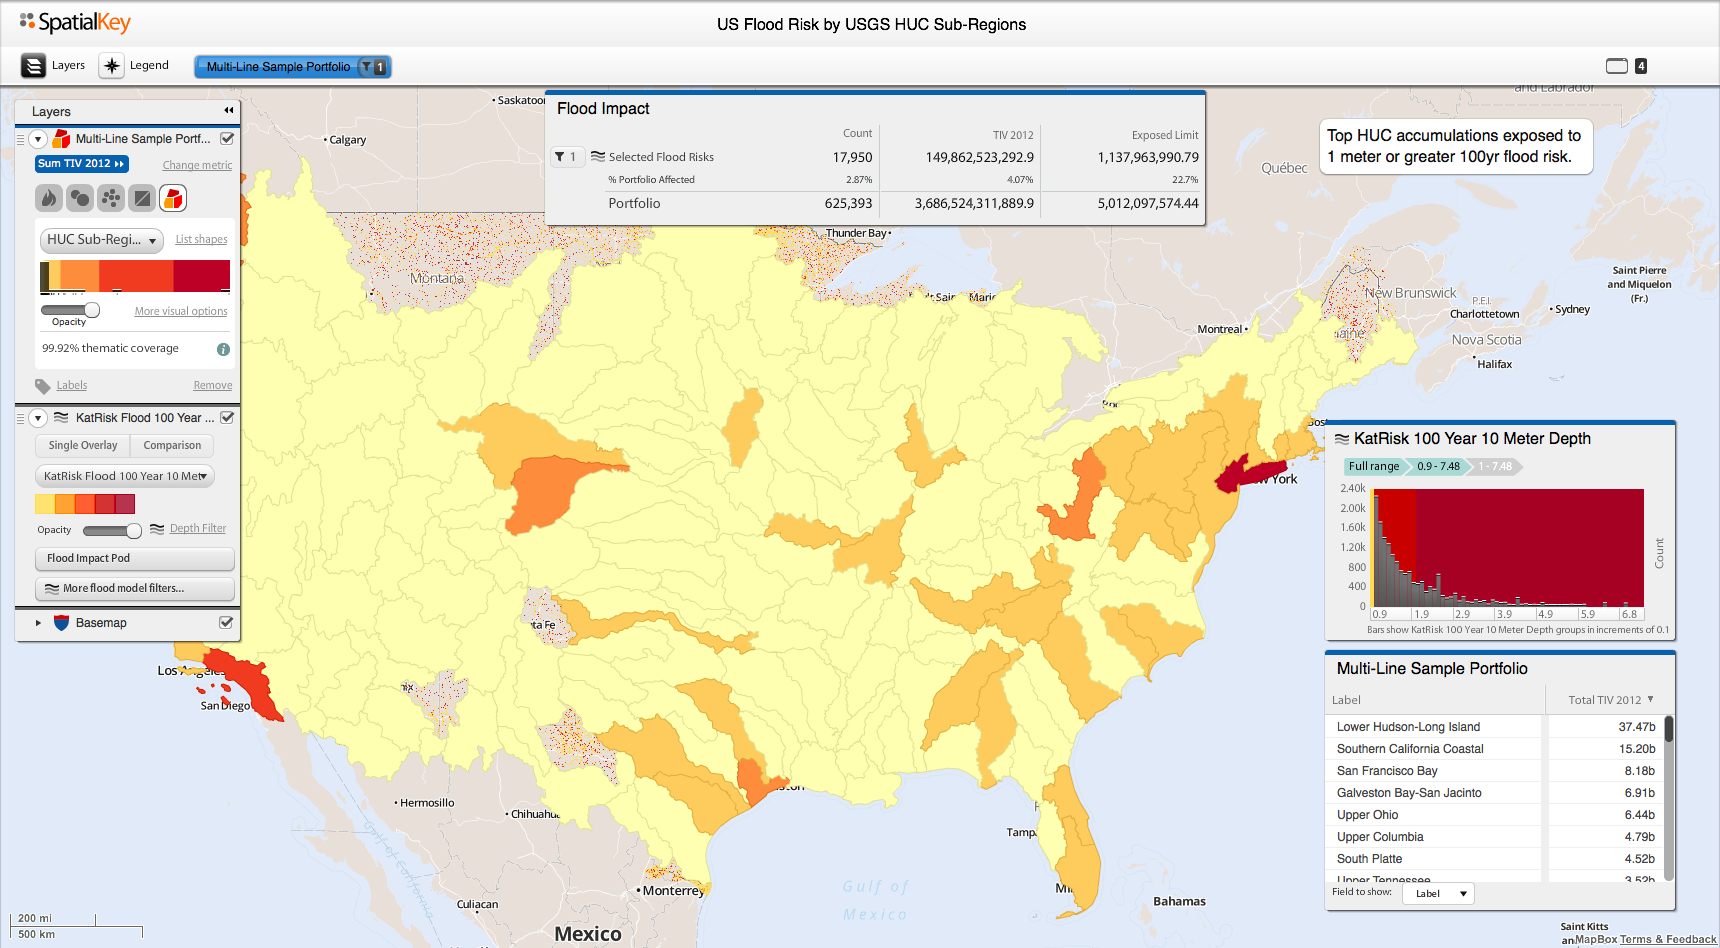 Identify high risk accumulations by USGS hydrological units